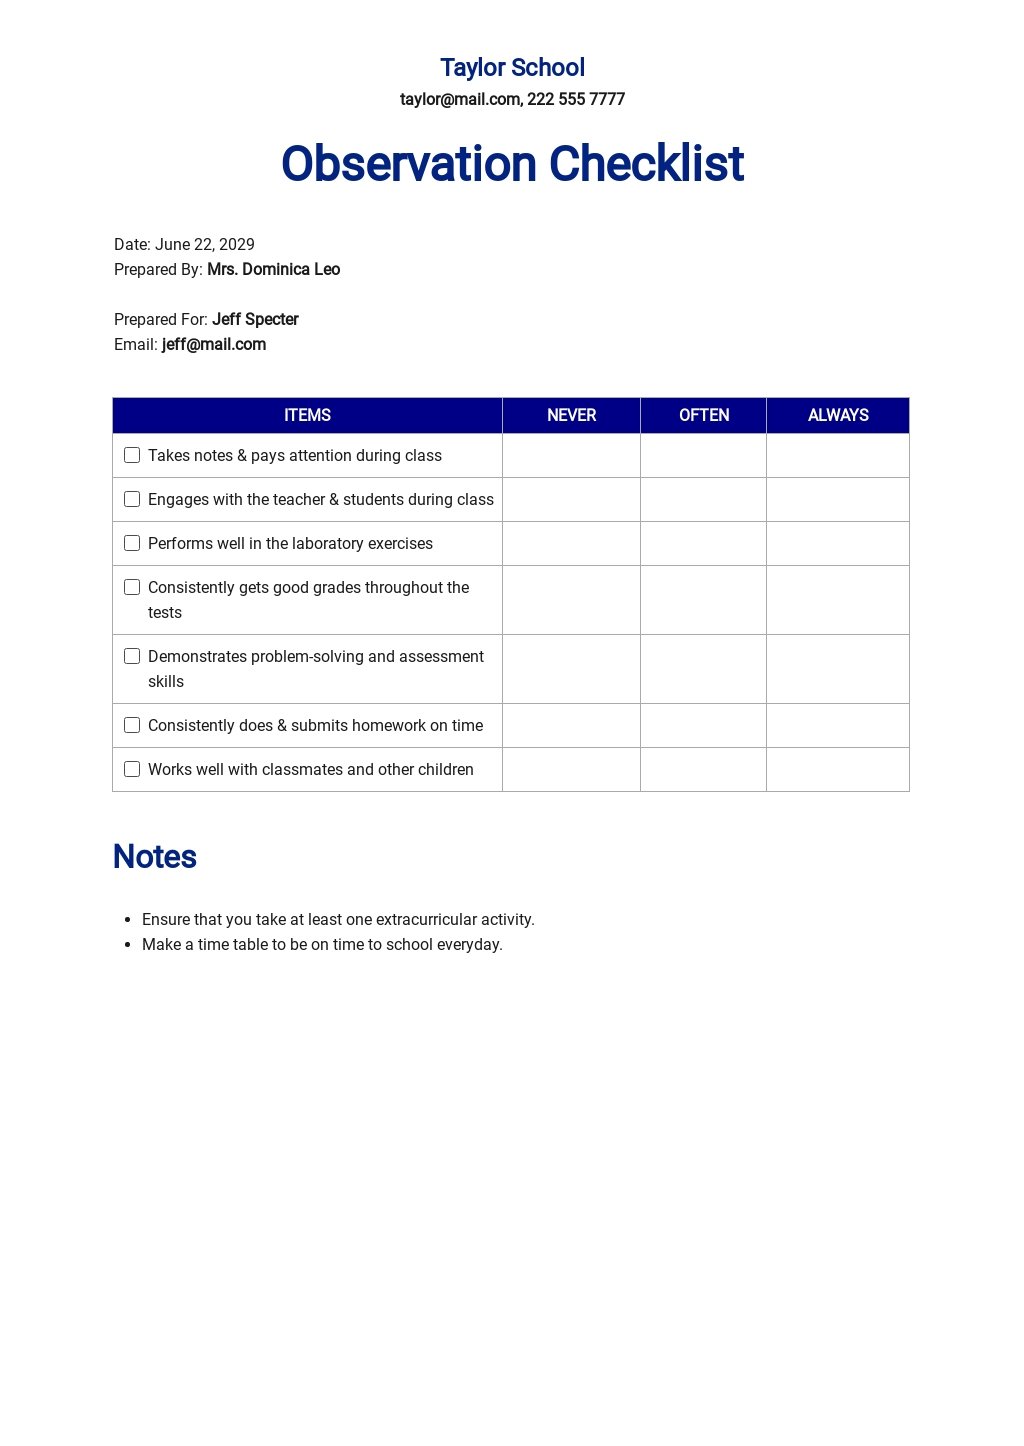 Observation Checklist Template [Free PDF] - Google Docs, Word, Apple